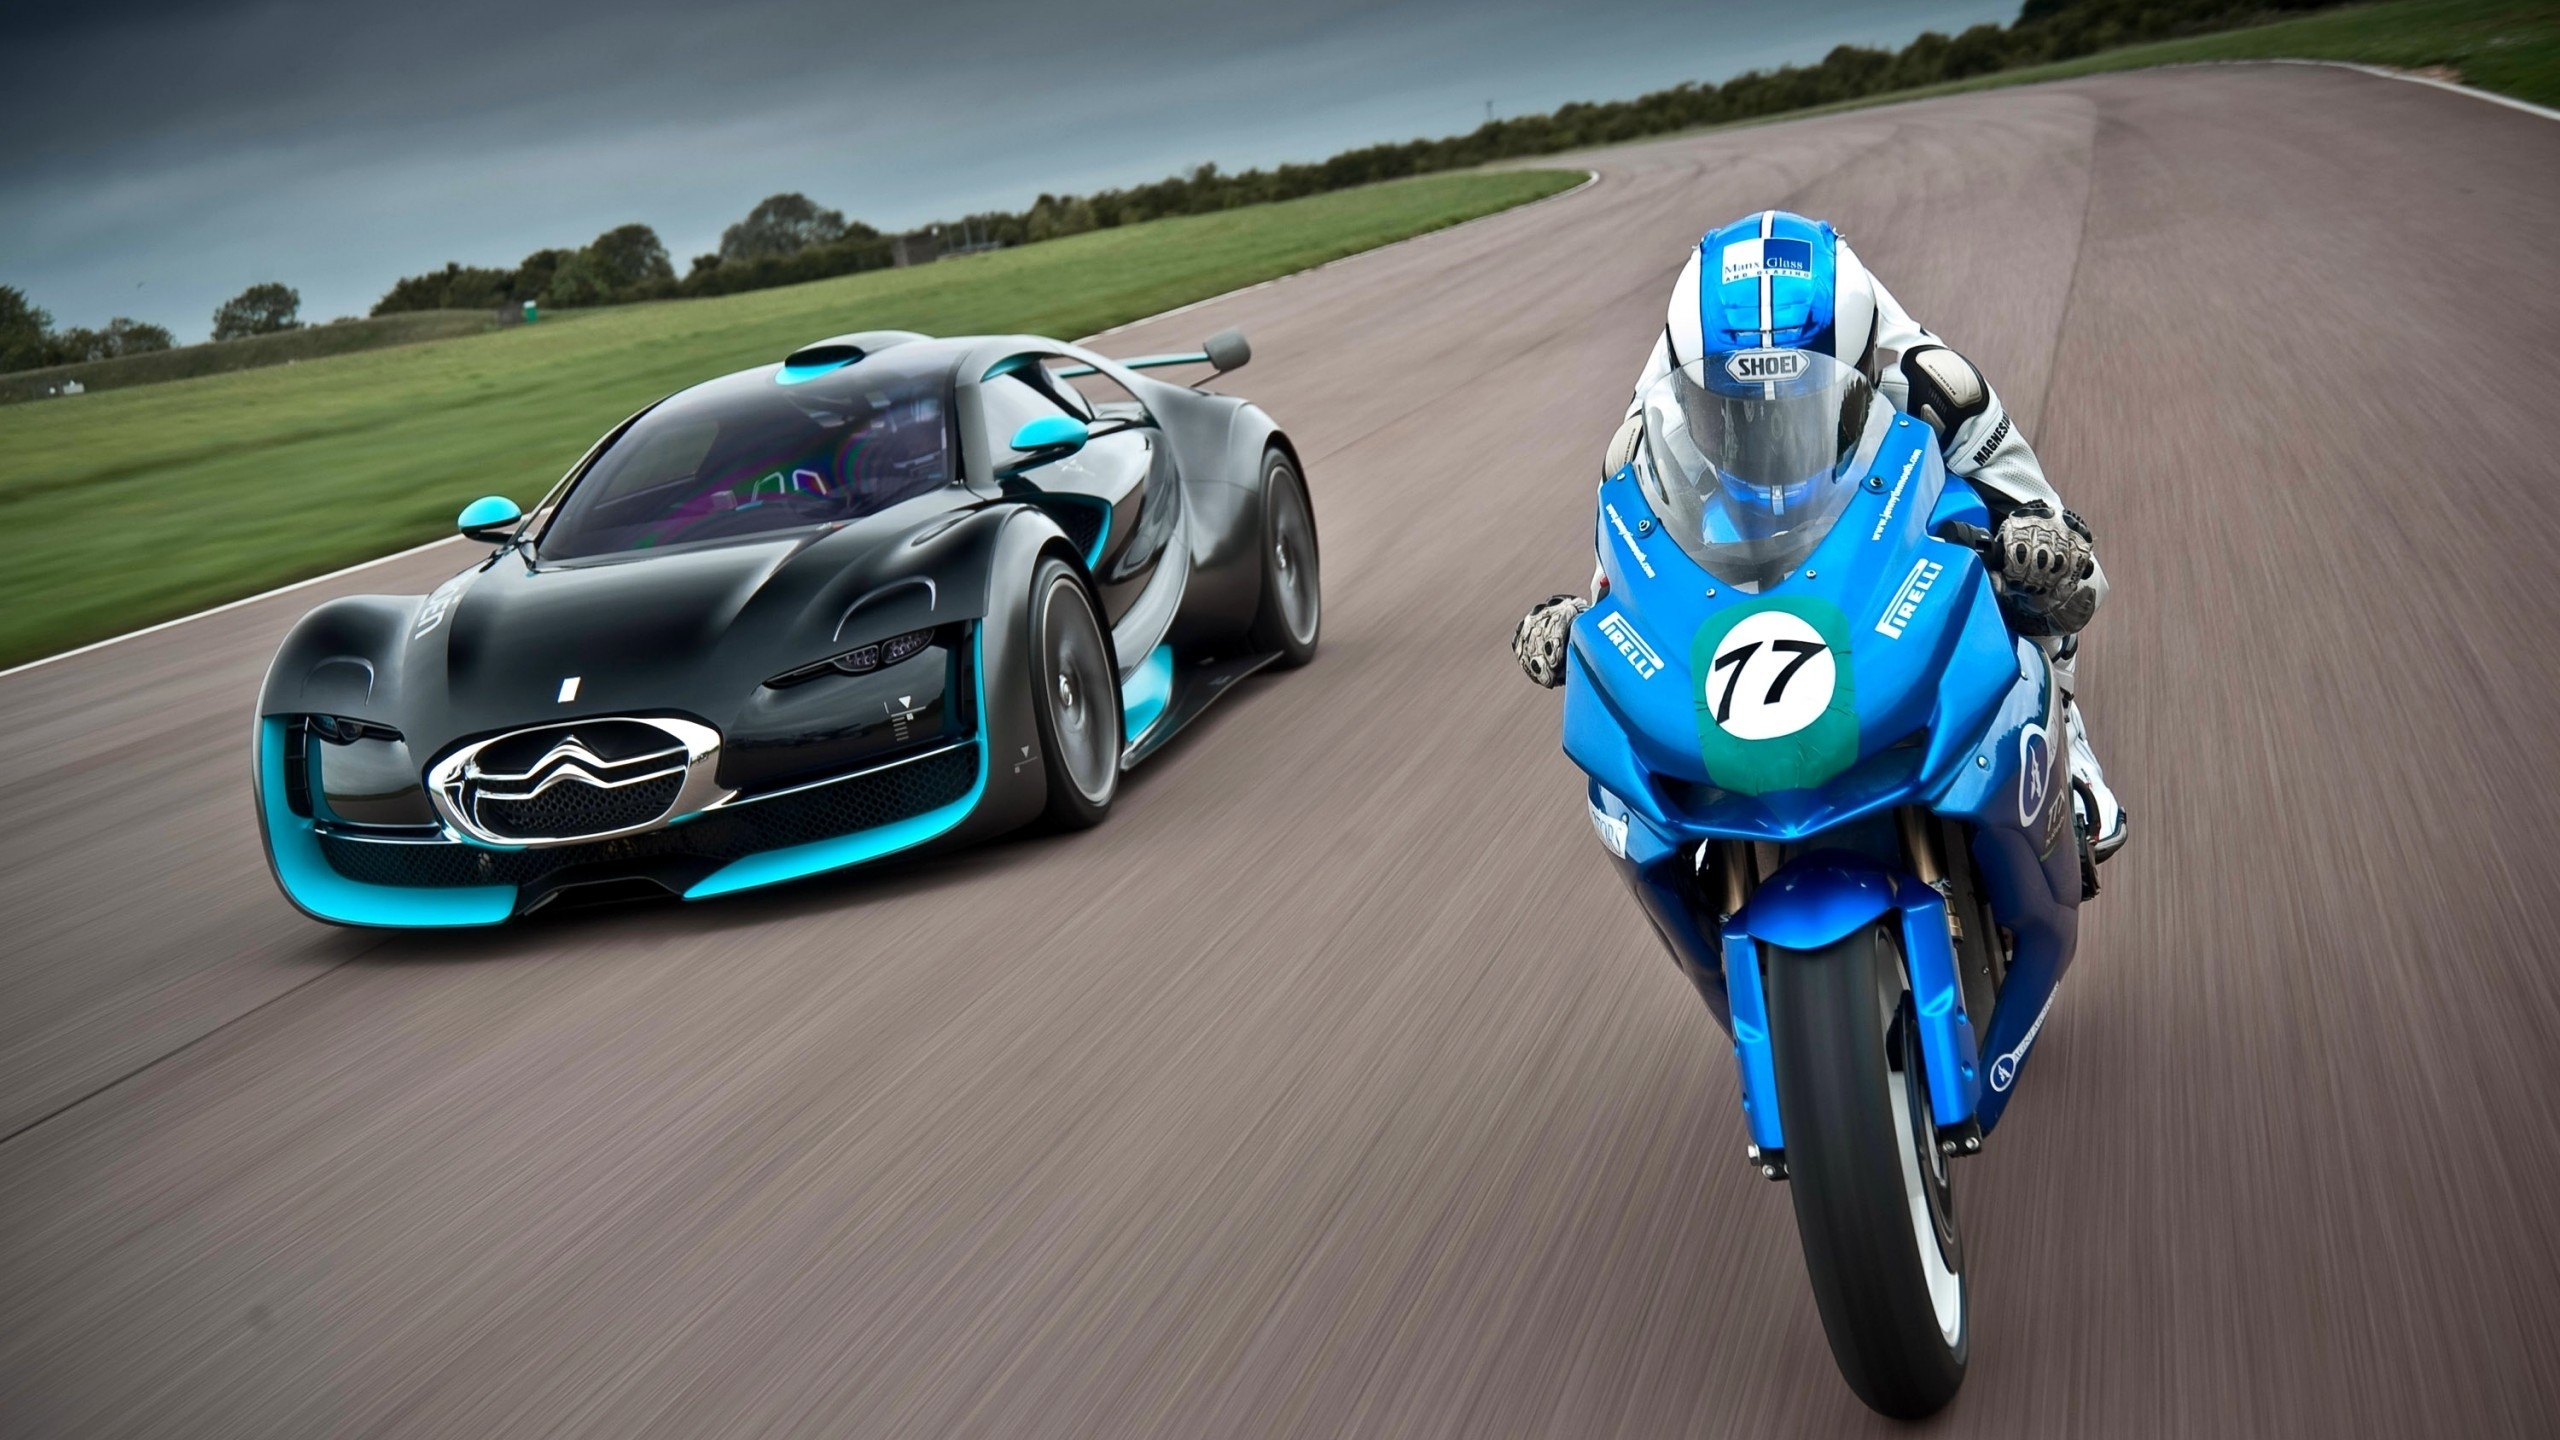 Citroen and Moto Race for 2560x1440 HDTV resolution